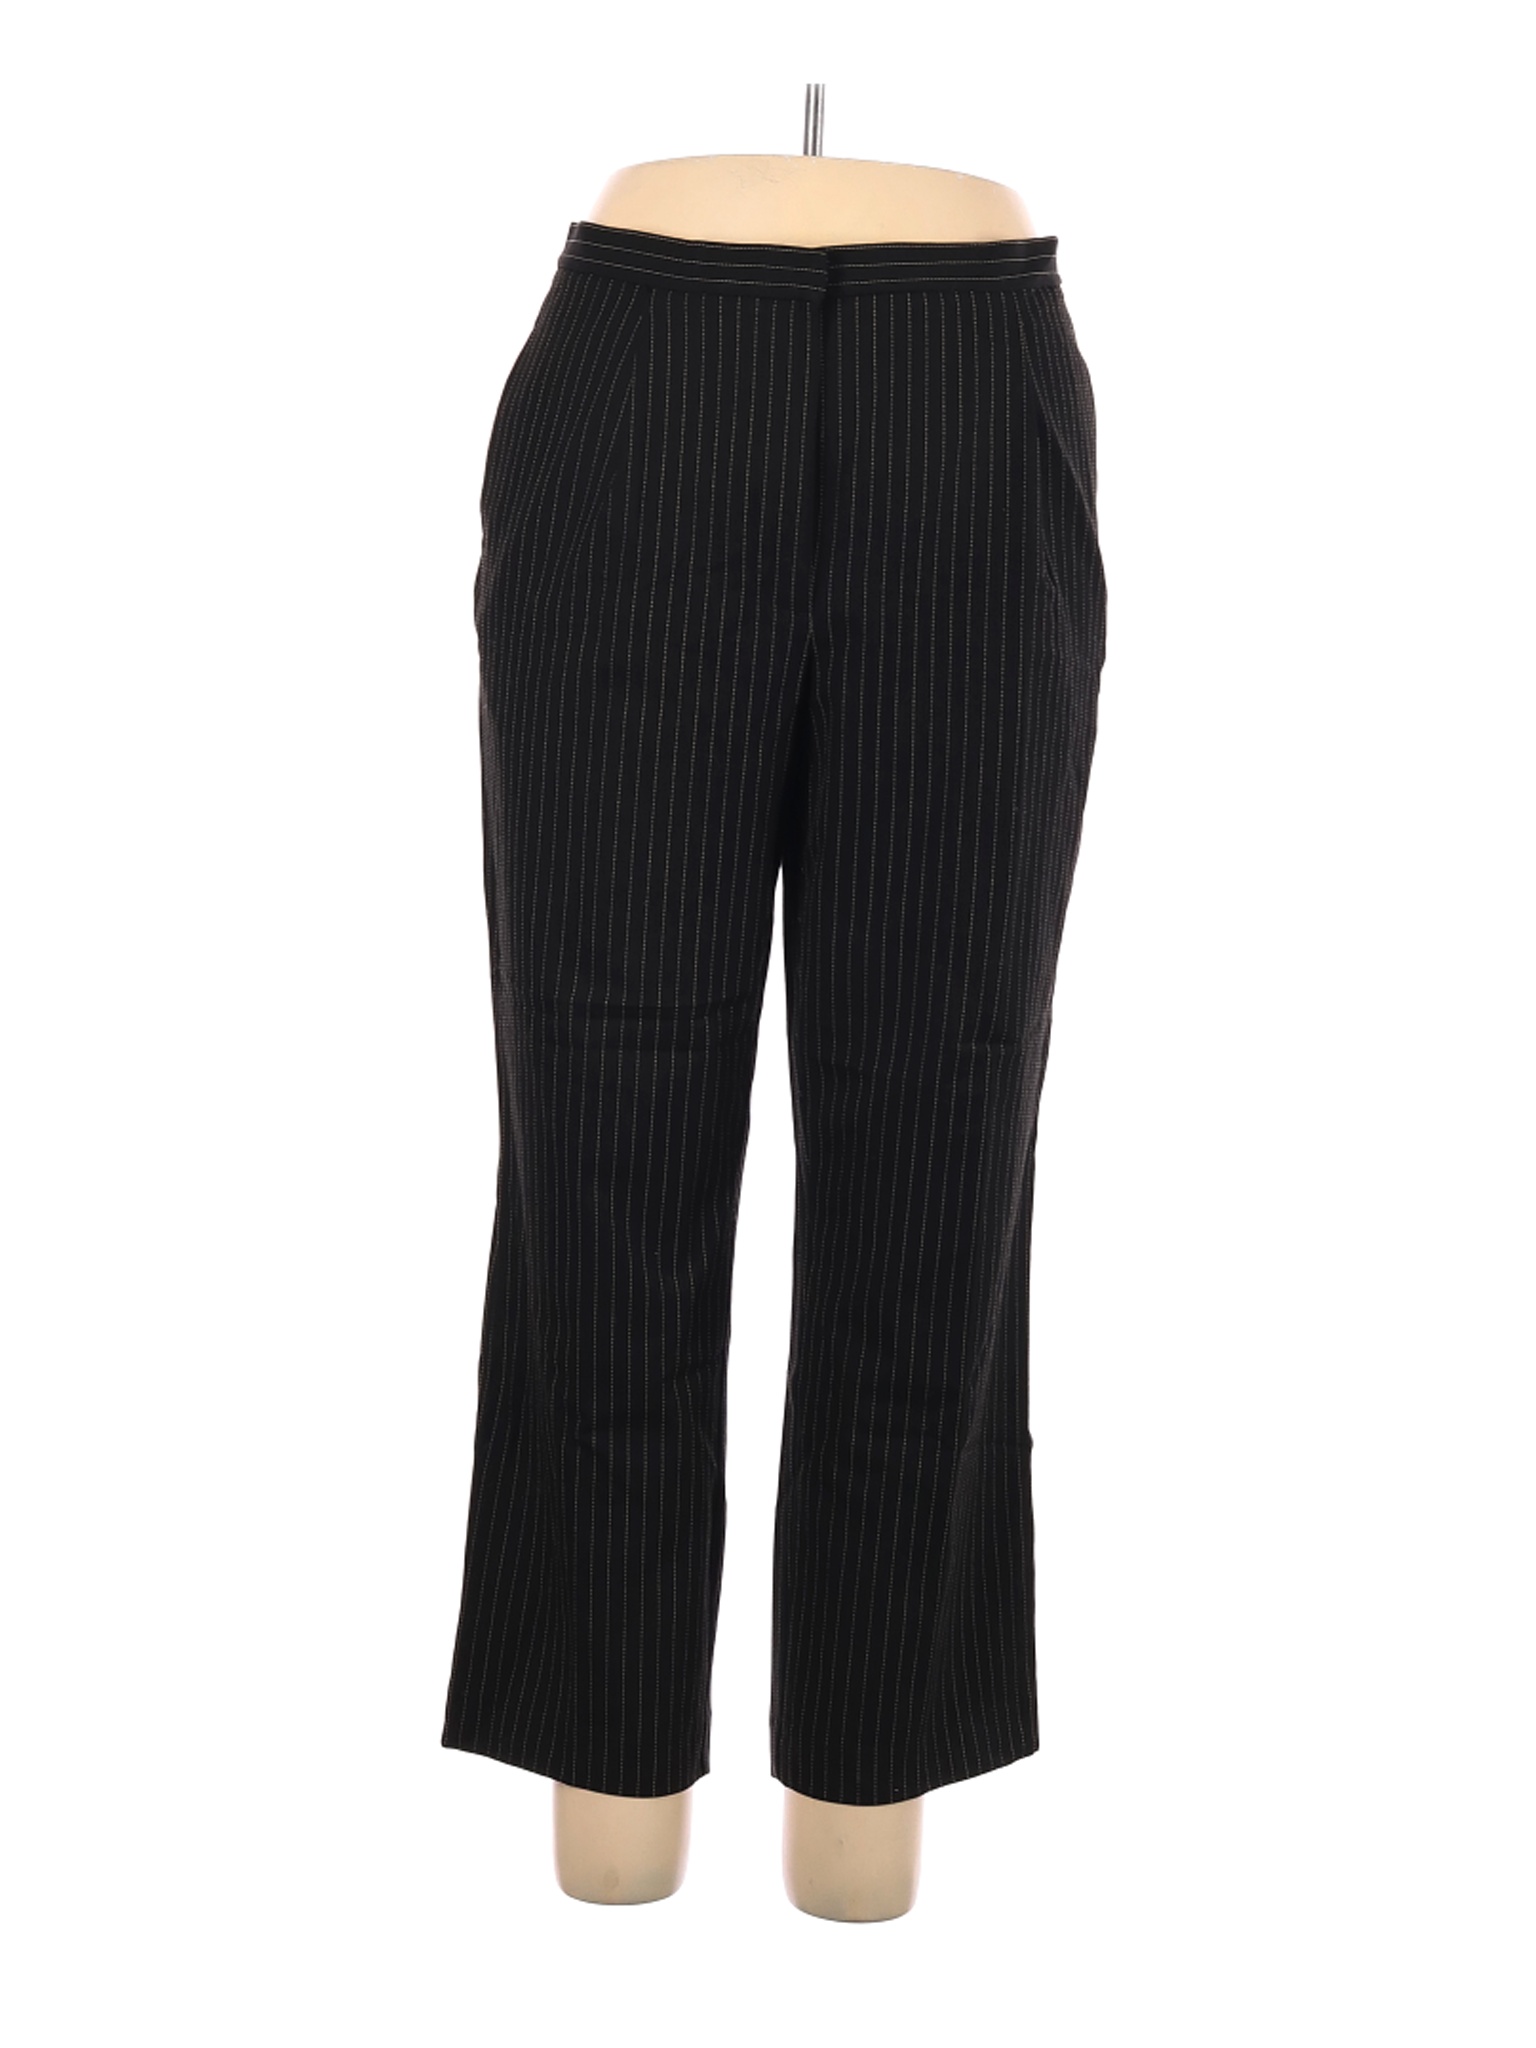 Liz Claiborne Women Black Dress Pants 16 Petites | eBay